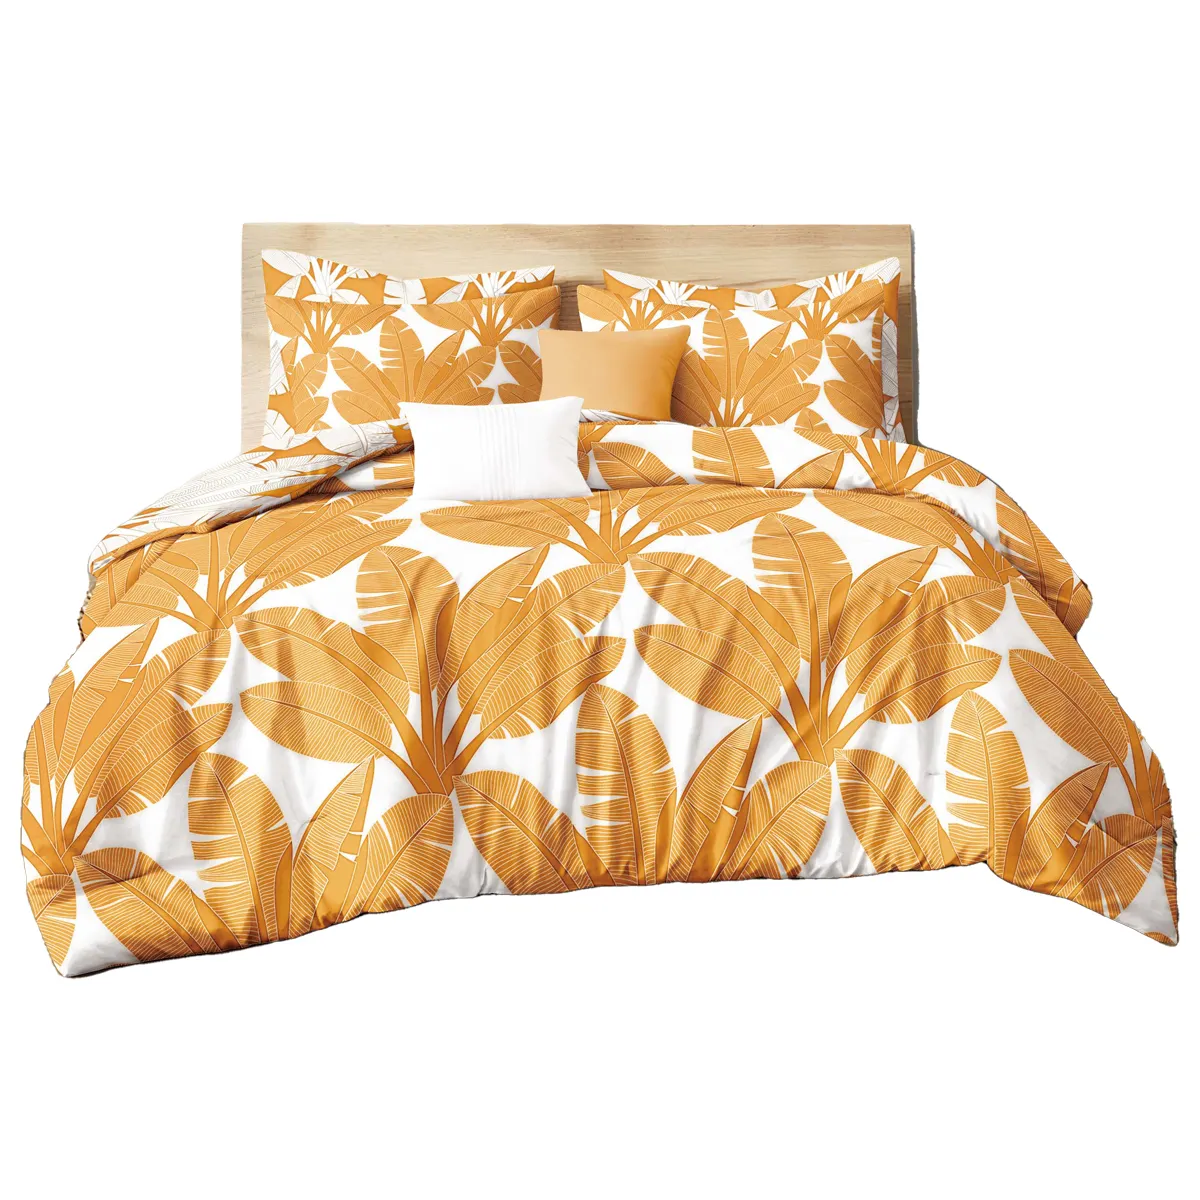 Set seprai tempat tidur katun nyaman, pasokan langsung dari pabrik, Set seprai polos lembut, daun kuning, oranye